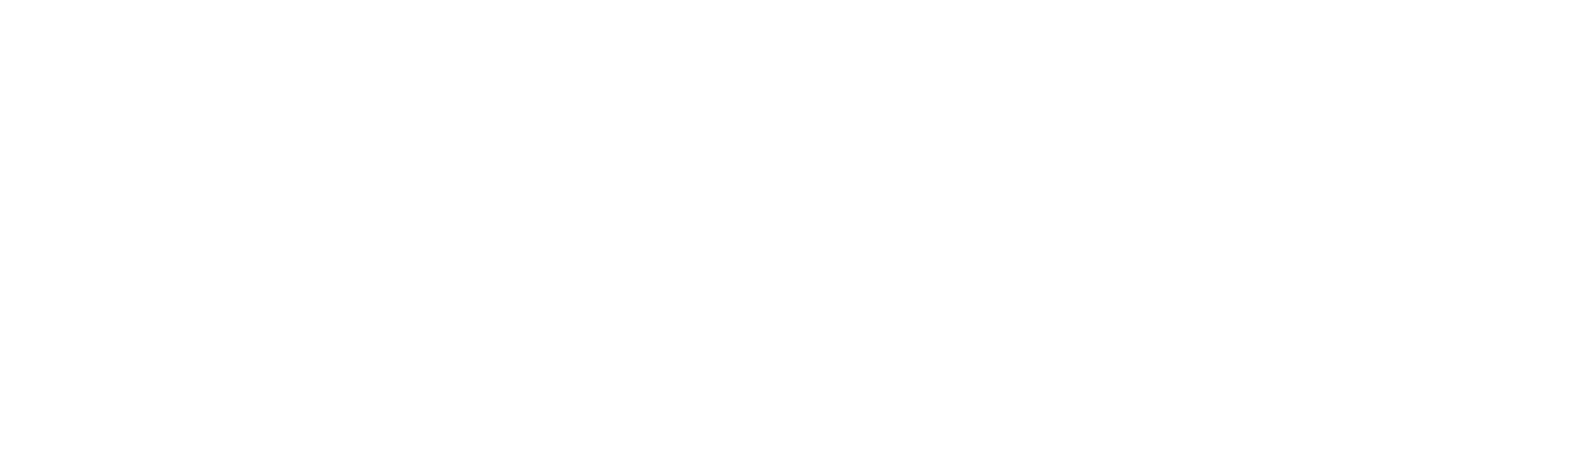 Kite Realty logo for dark backgrounds (transparent PNG)